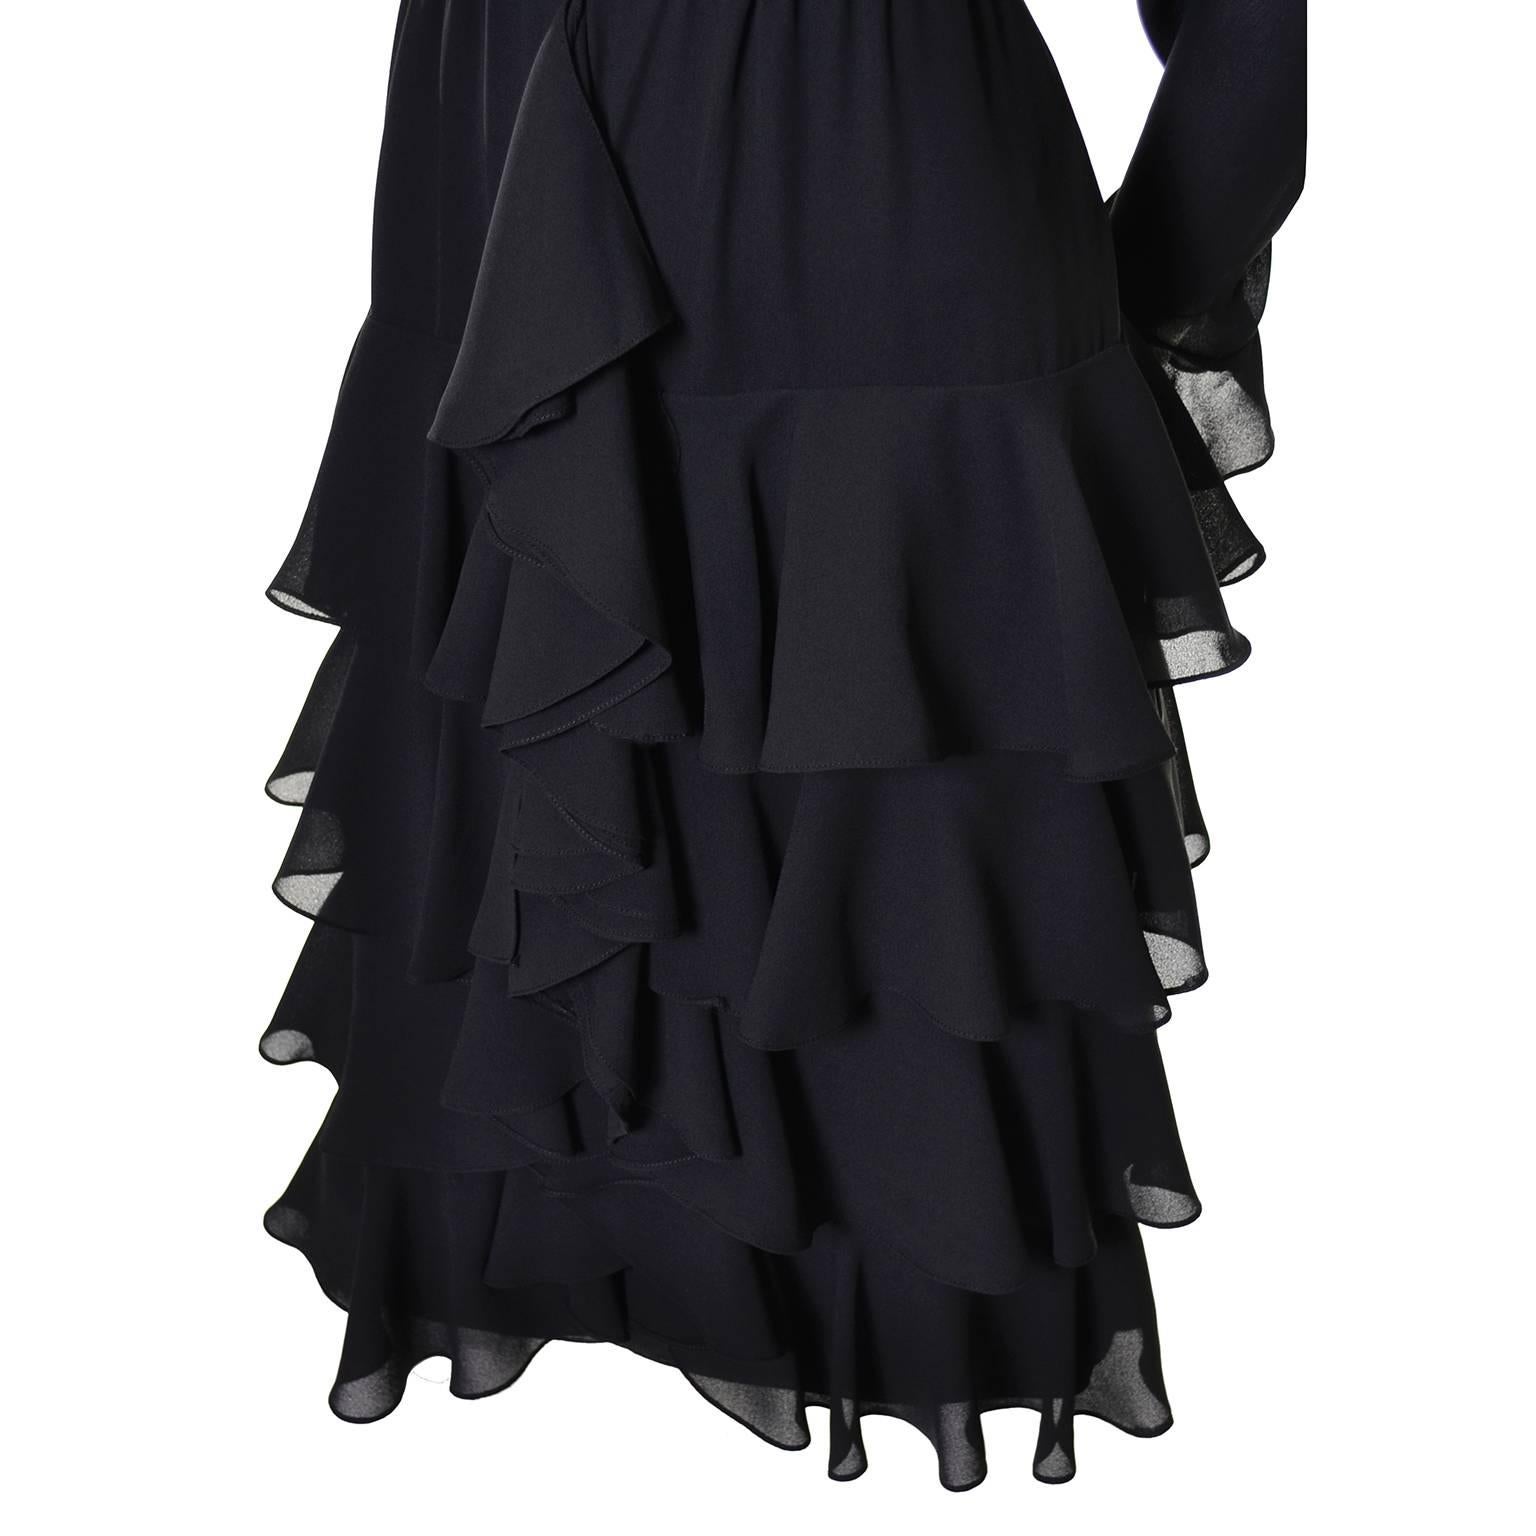 Women's Bill Blass 1980s Vintage Cocktail Black Silk Dress With Ruffles & Layers Sz 6/8